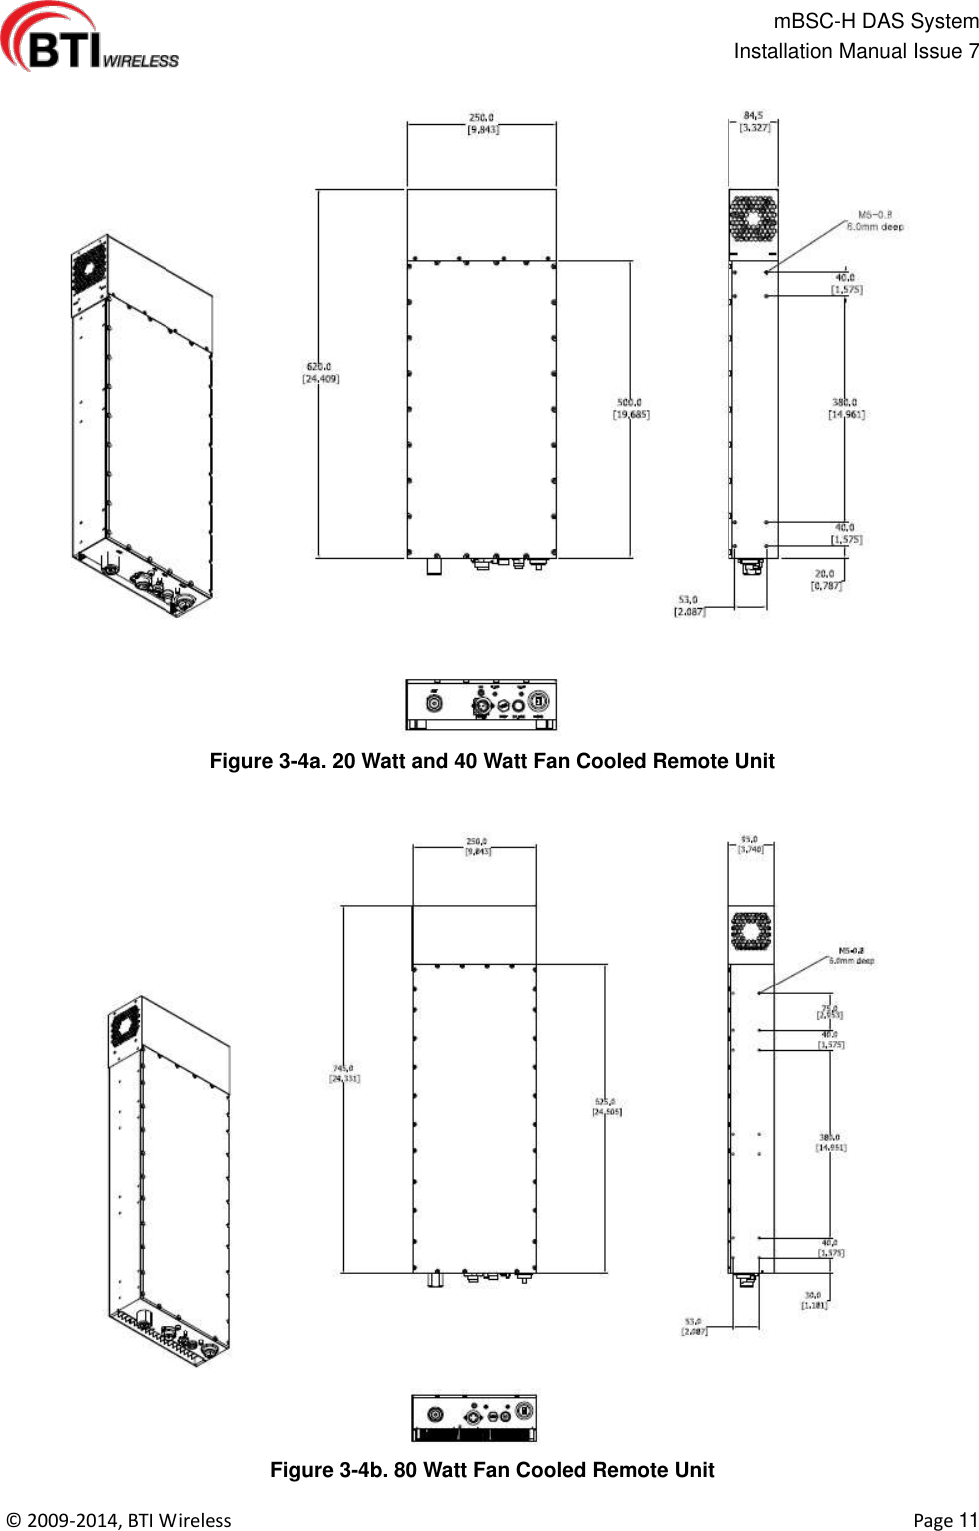                                                   mBSC-H DAS System   Installation Manual Issue 7  ©  2009-2014, BTI Wireless    Page 11   Figure 3-4a. 20 Watt and 40 Watt Fan Cooled Remote Unit     Figure 3-4b. 80 Watt Fan Cooled Remote Unit 